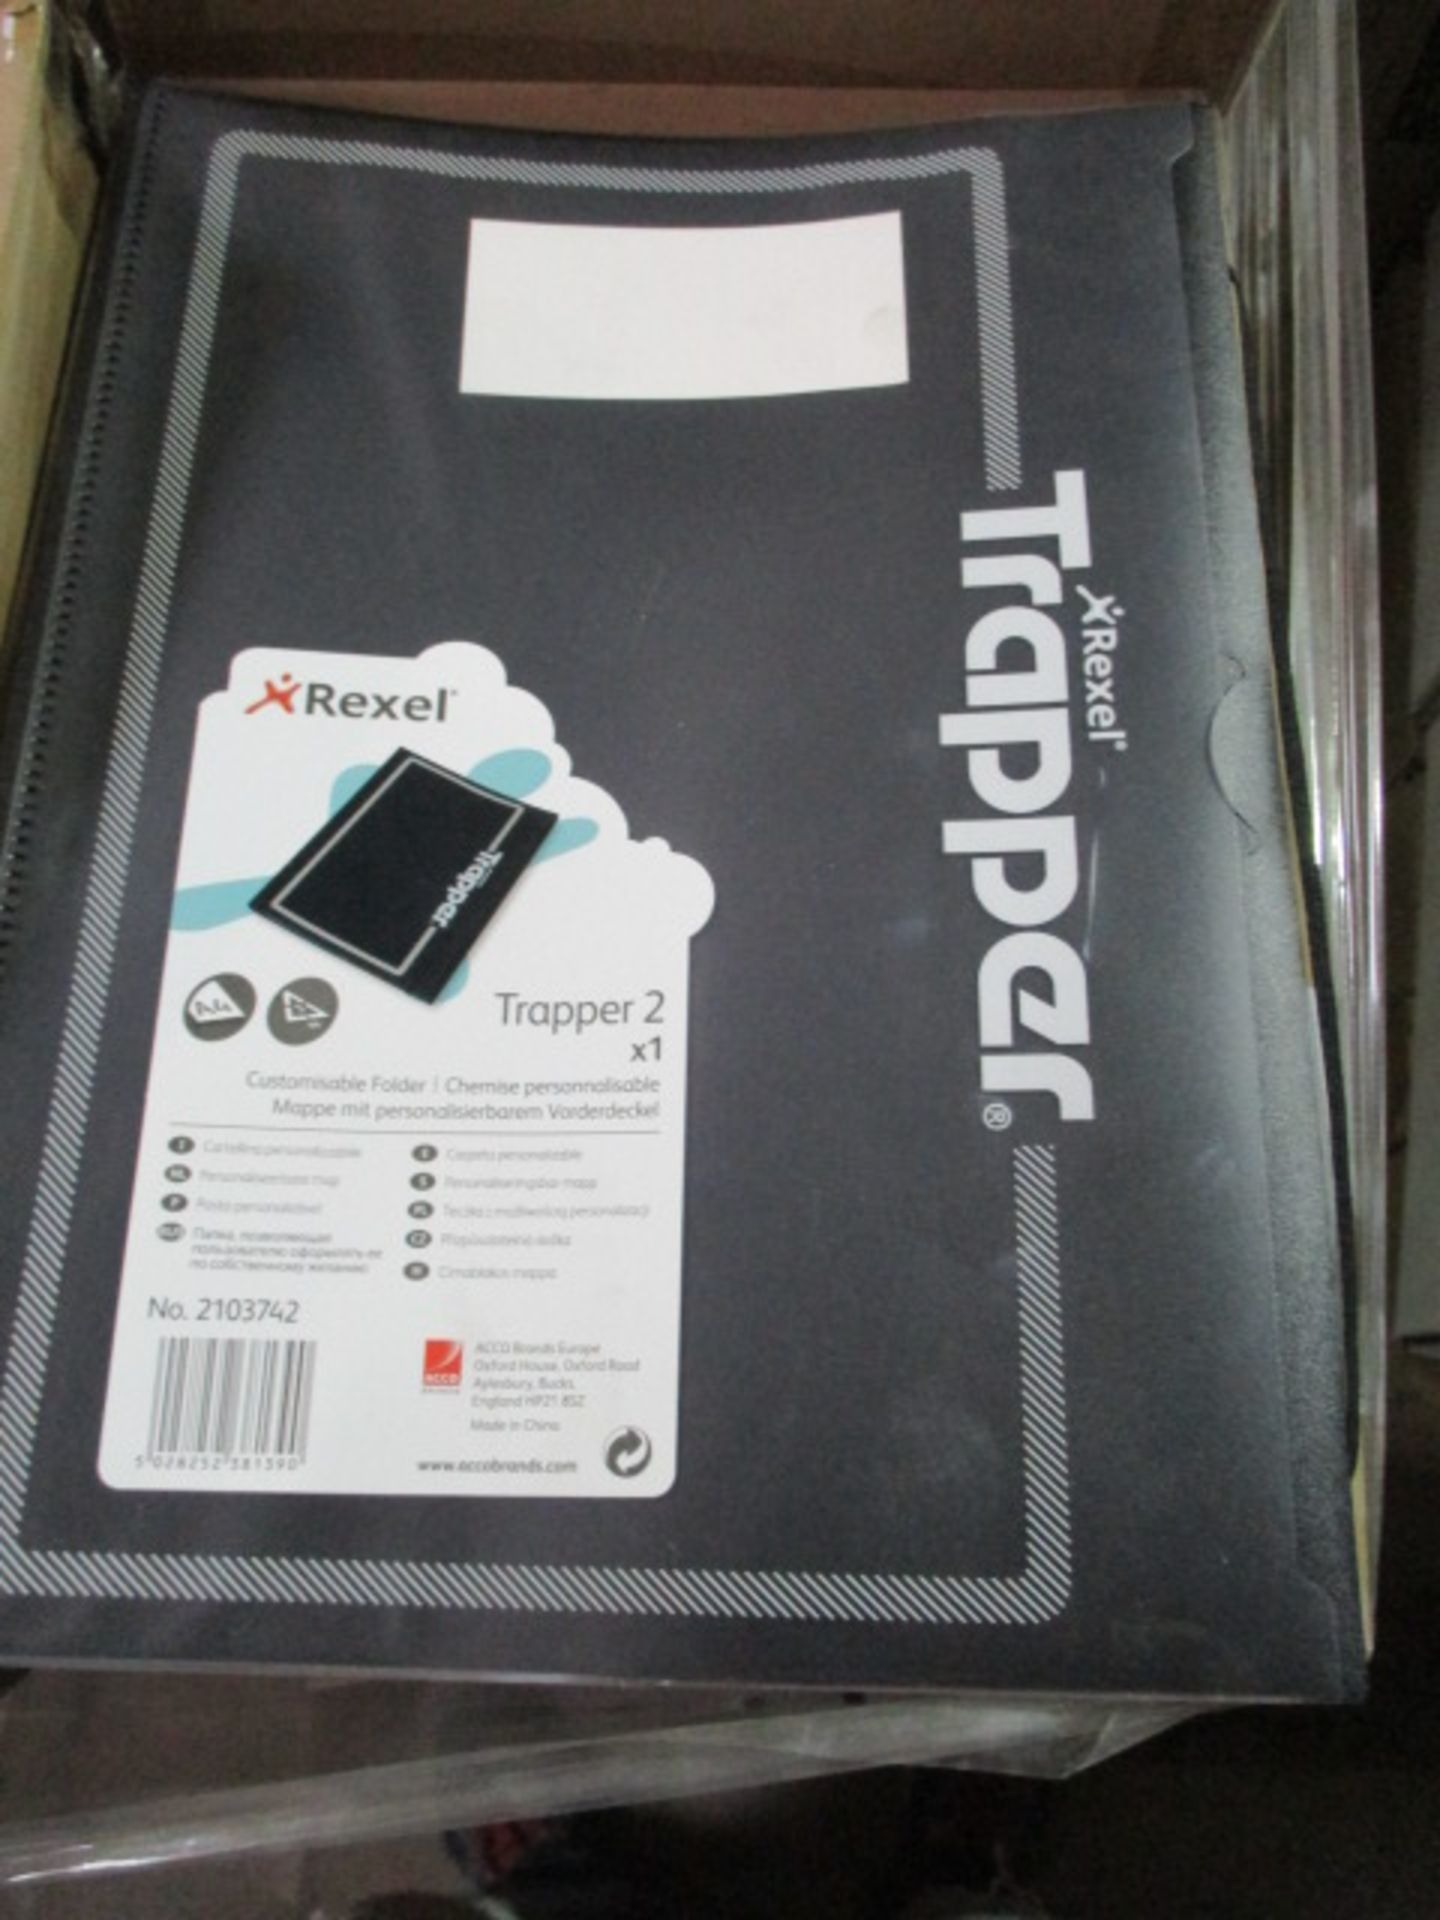 126 pcs Rexel Brand new Sealed Trapper folder system - Image 3 of 6